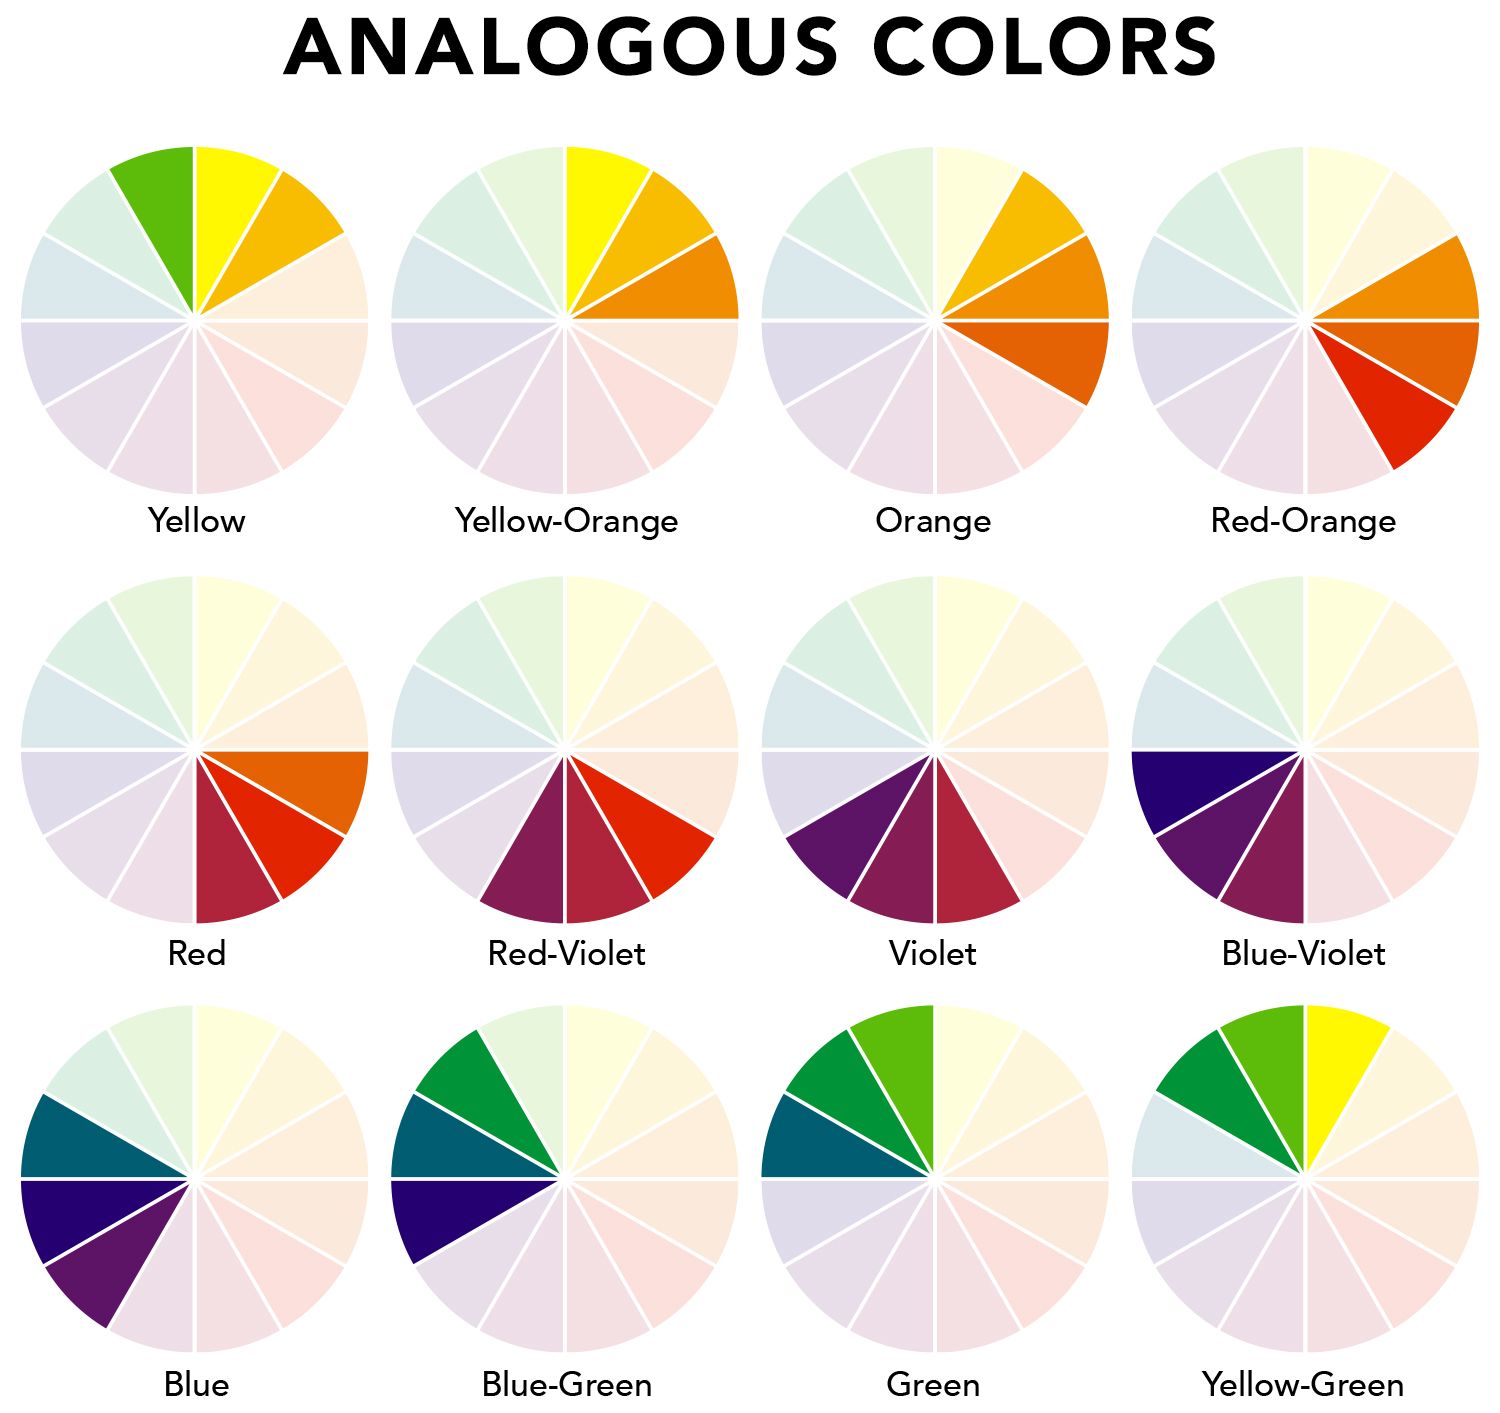 analogous-colors-1560190216.jpg